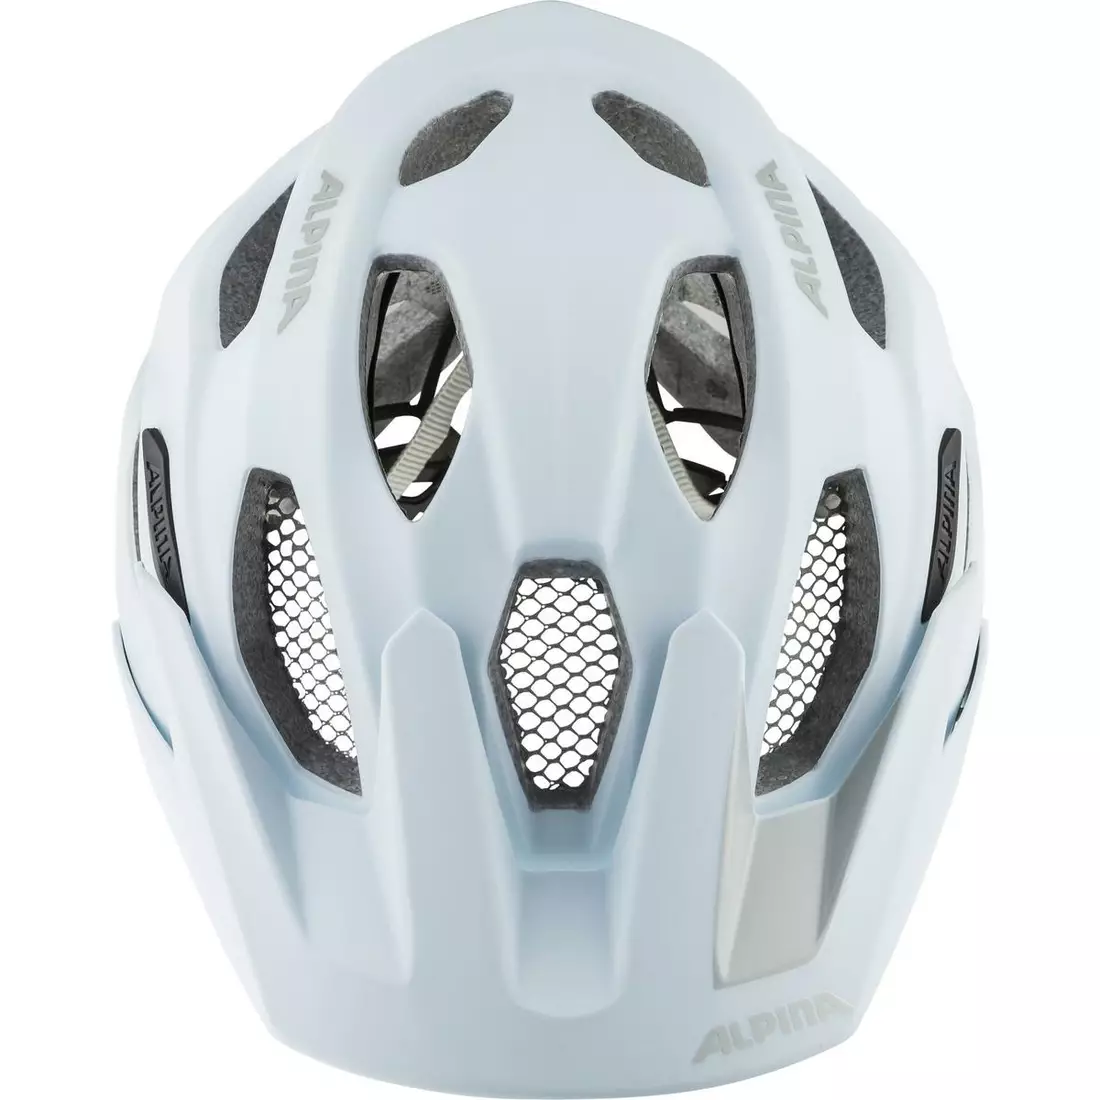 ALPINA CARAPAX 2.0 Cyklistická helma Enduro, Bílý 